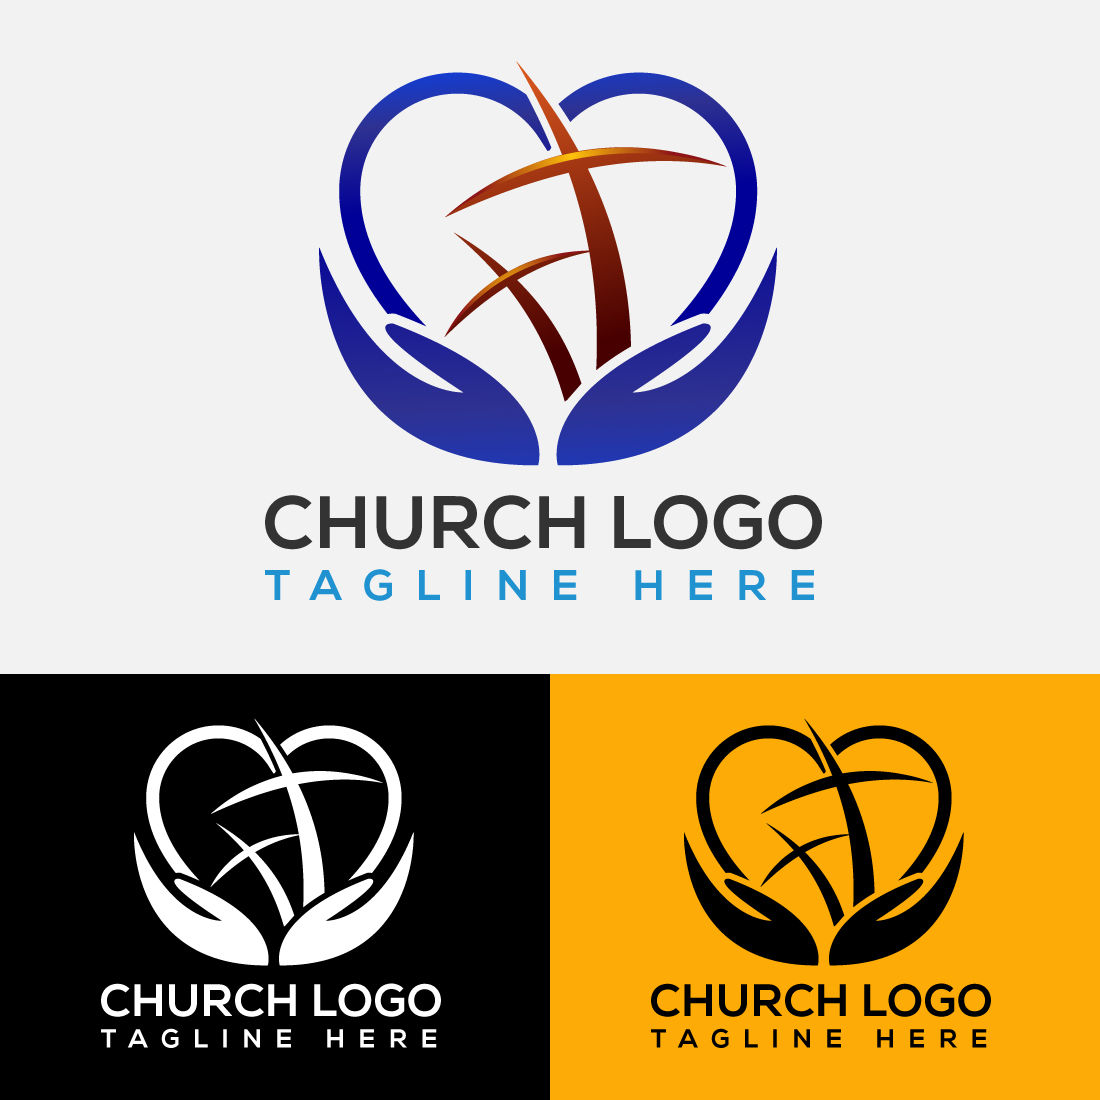 Church Logo Design Vector Illustration cover image.